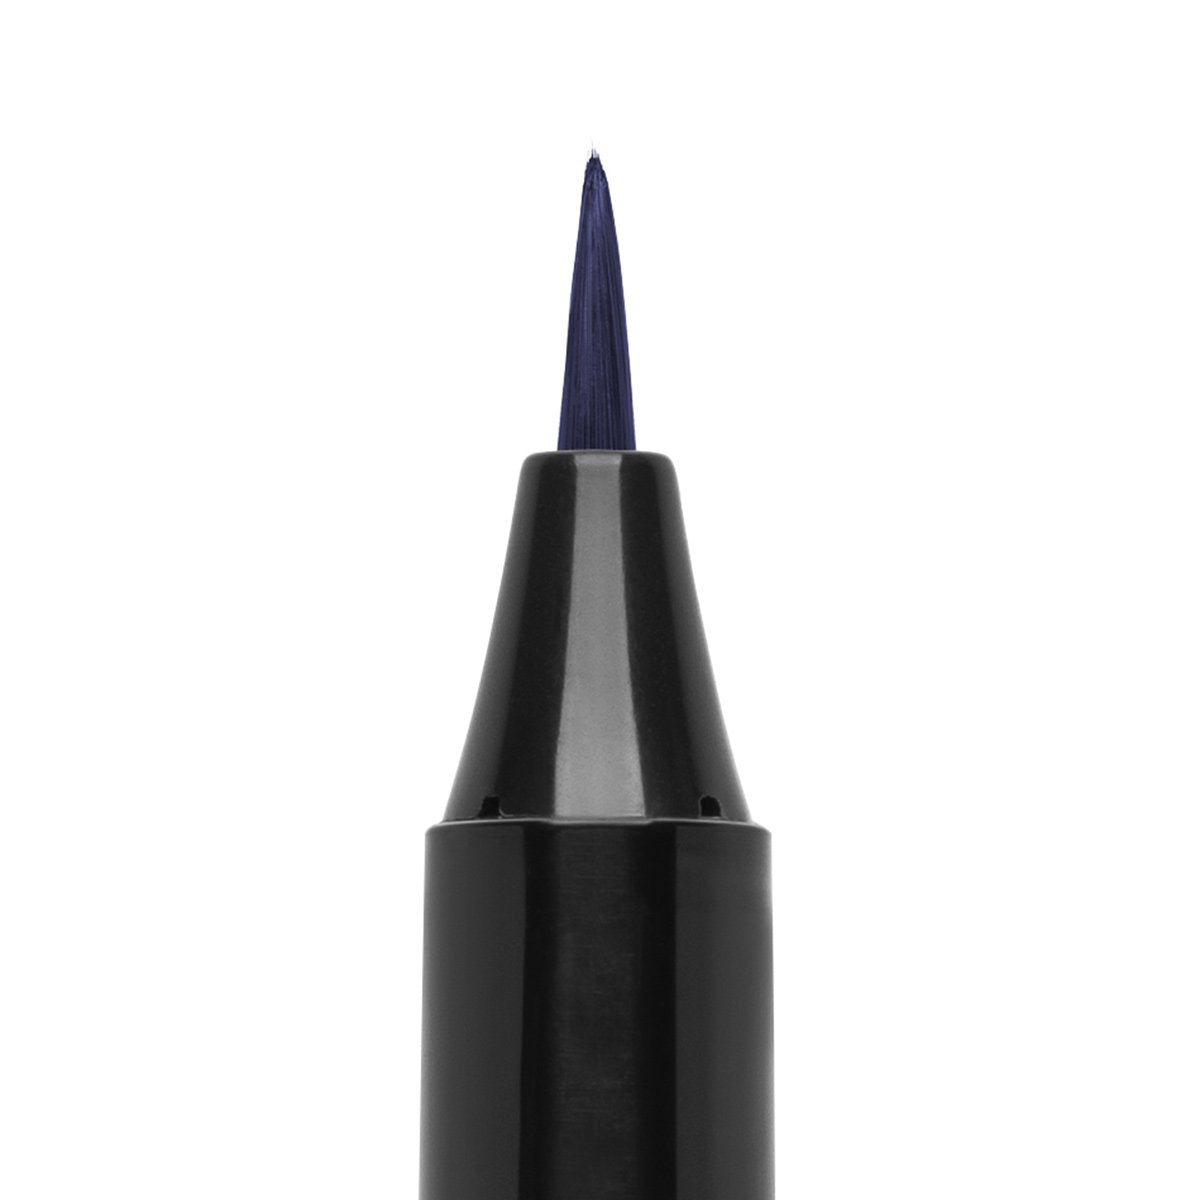 INDIGO JAPONAIS - DARK BLUE - long-wearing liquid eyeliner with precise brush tip in dark blue shade